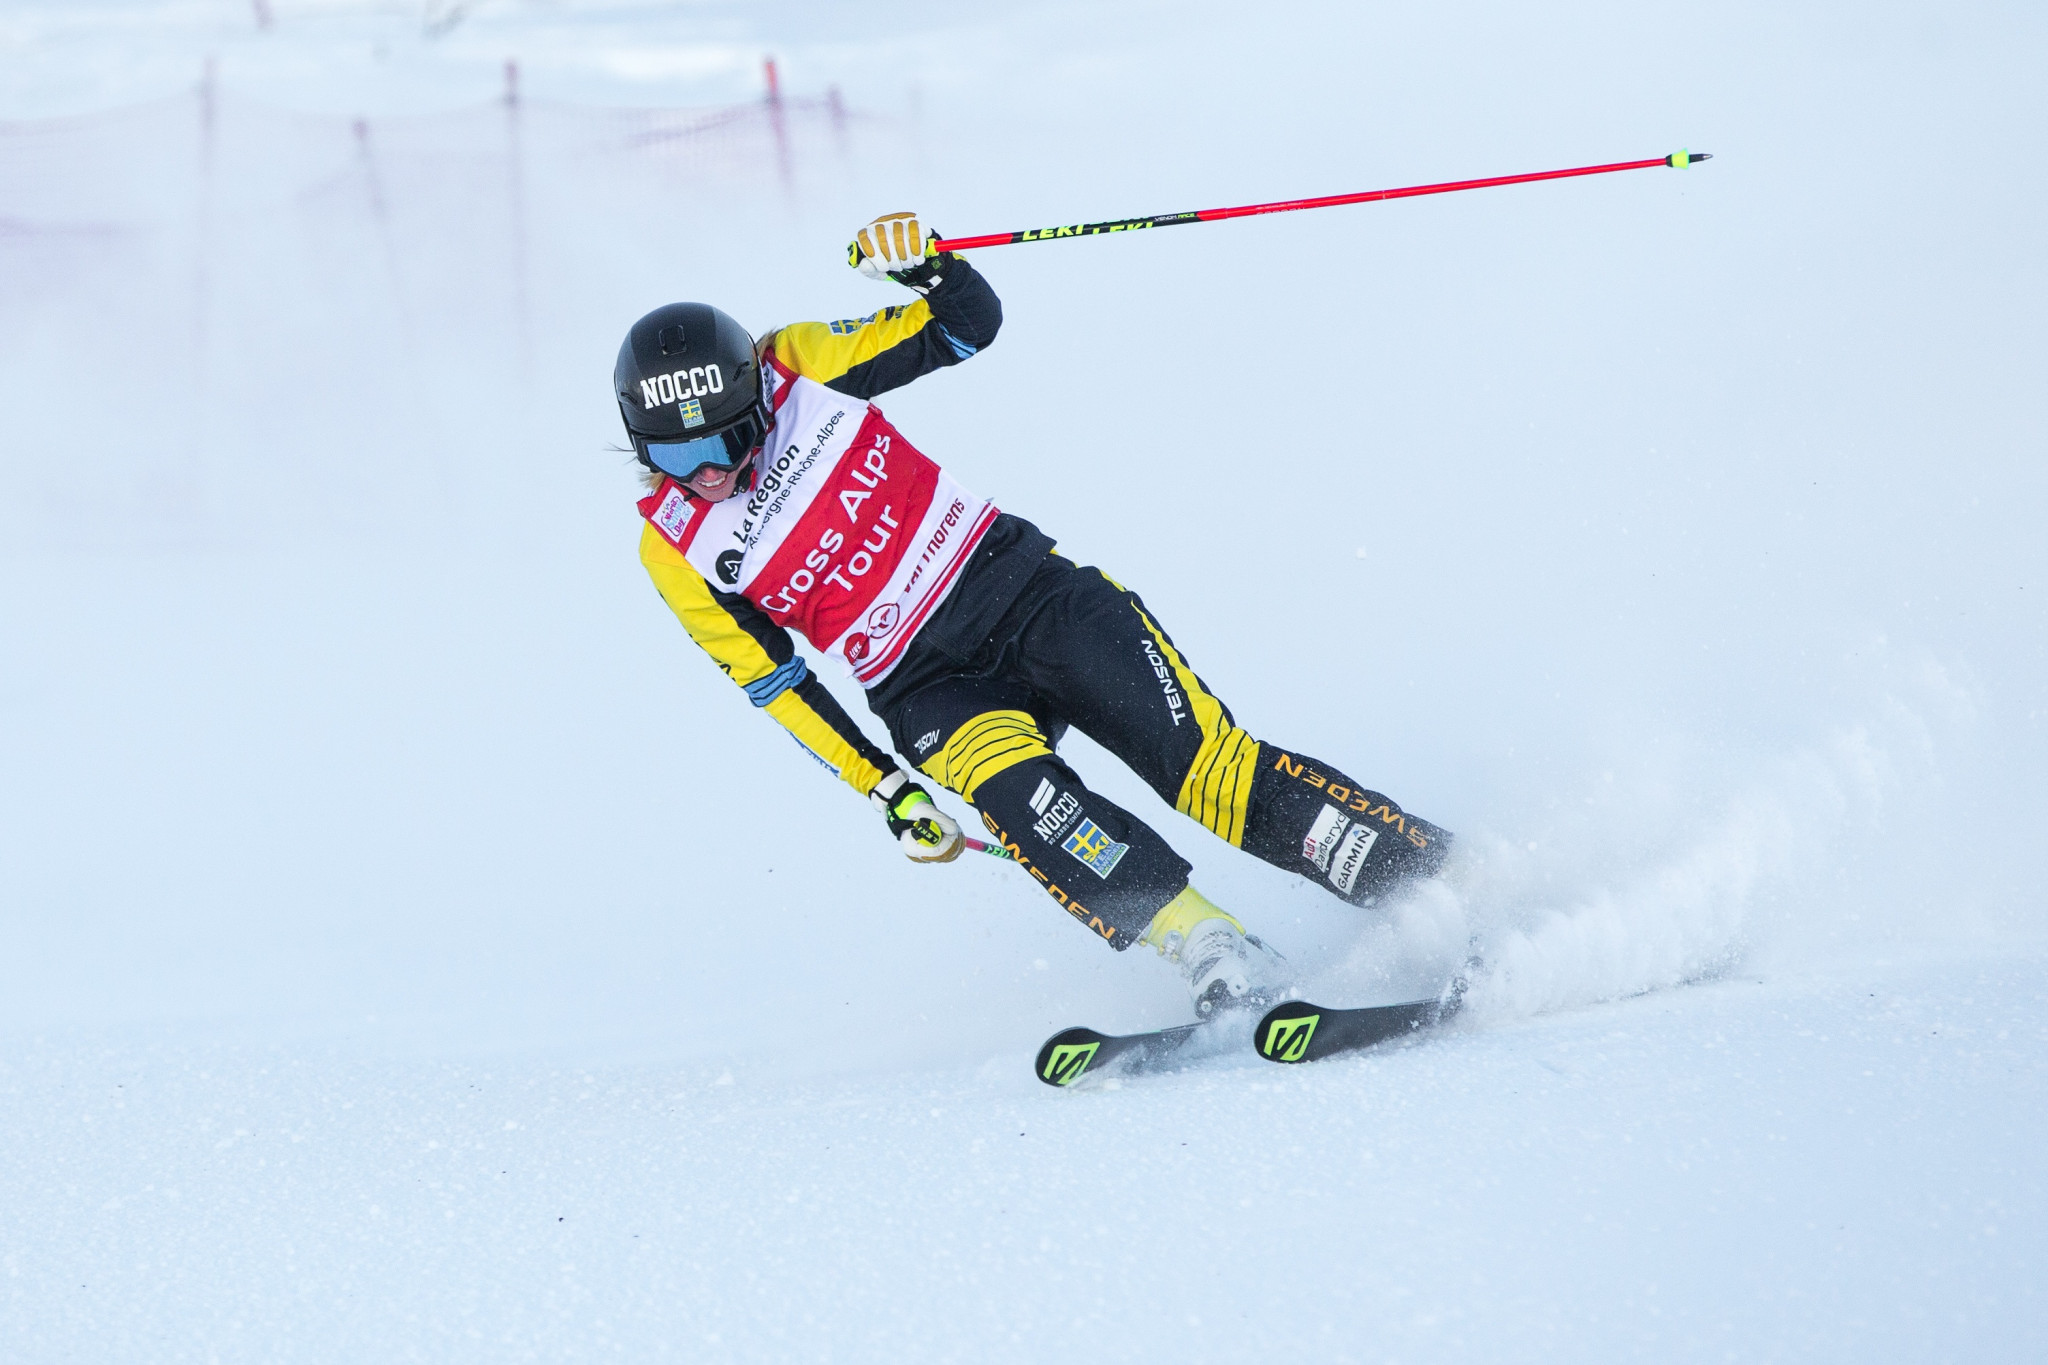 Sandra Näslund has won her eighth Ski Cross World Cup event this season ©Getty Images